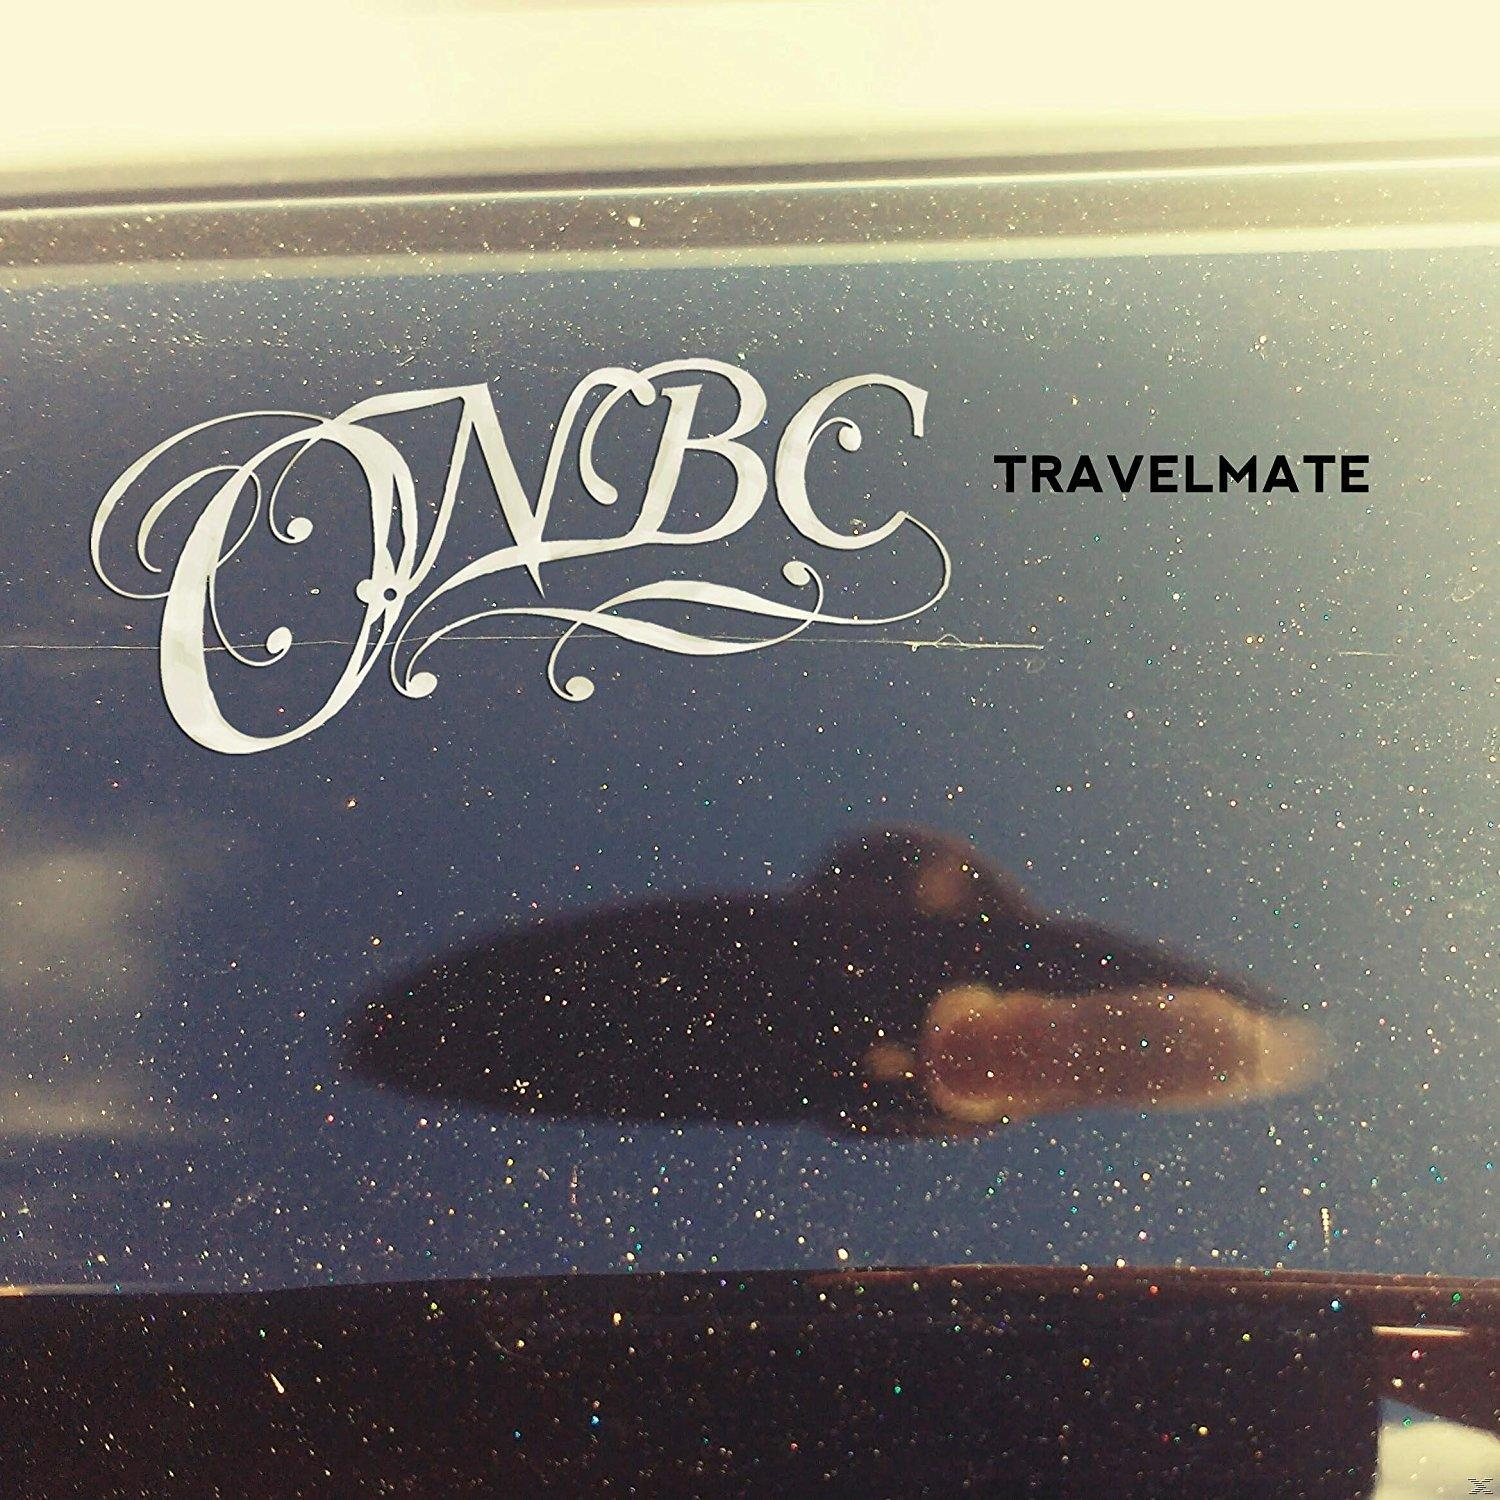 Onbc - Vinyl) (Black - Travelmate (Vinyl)